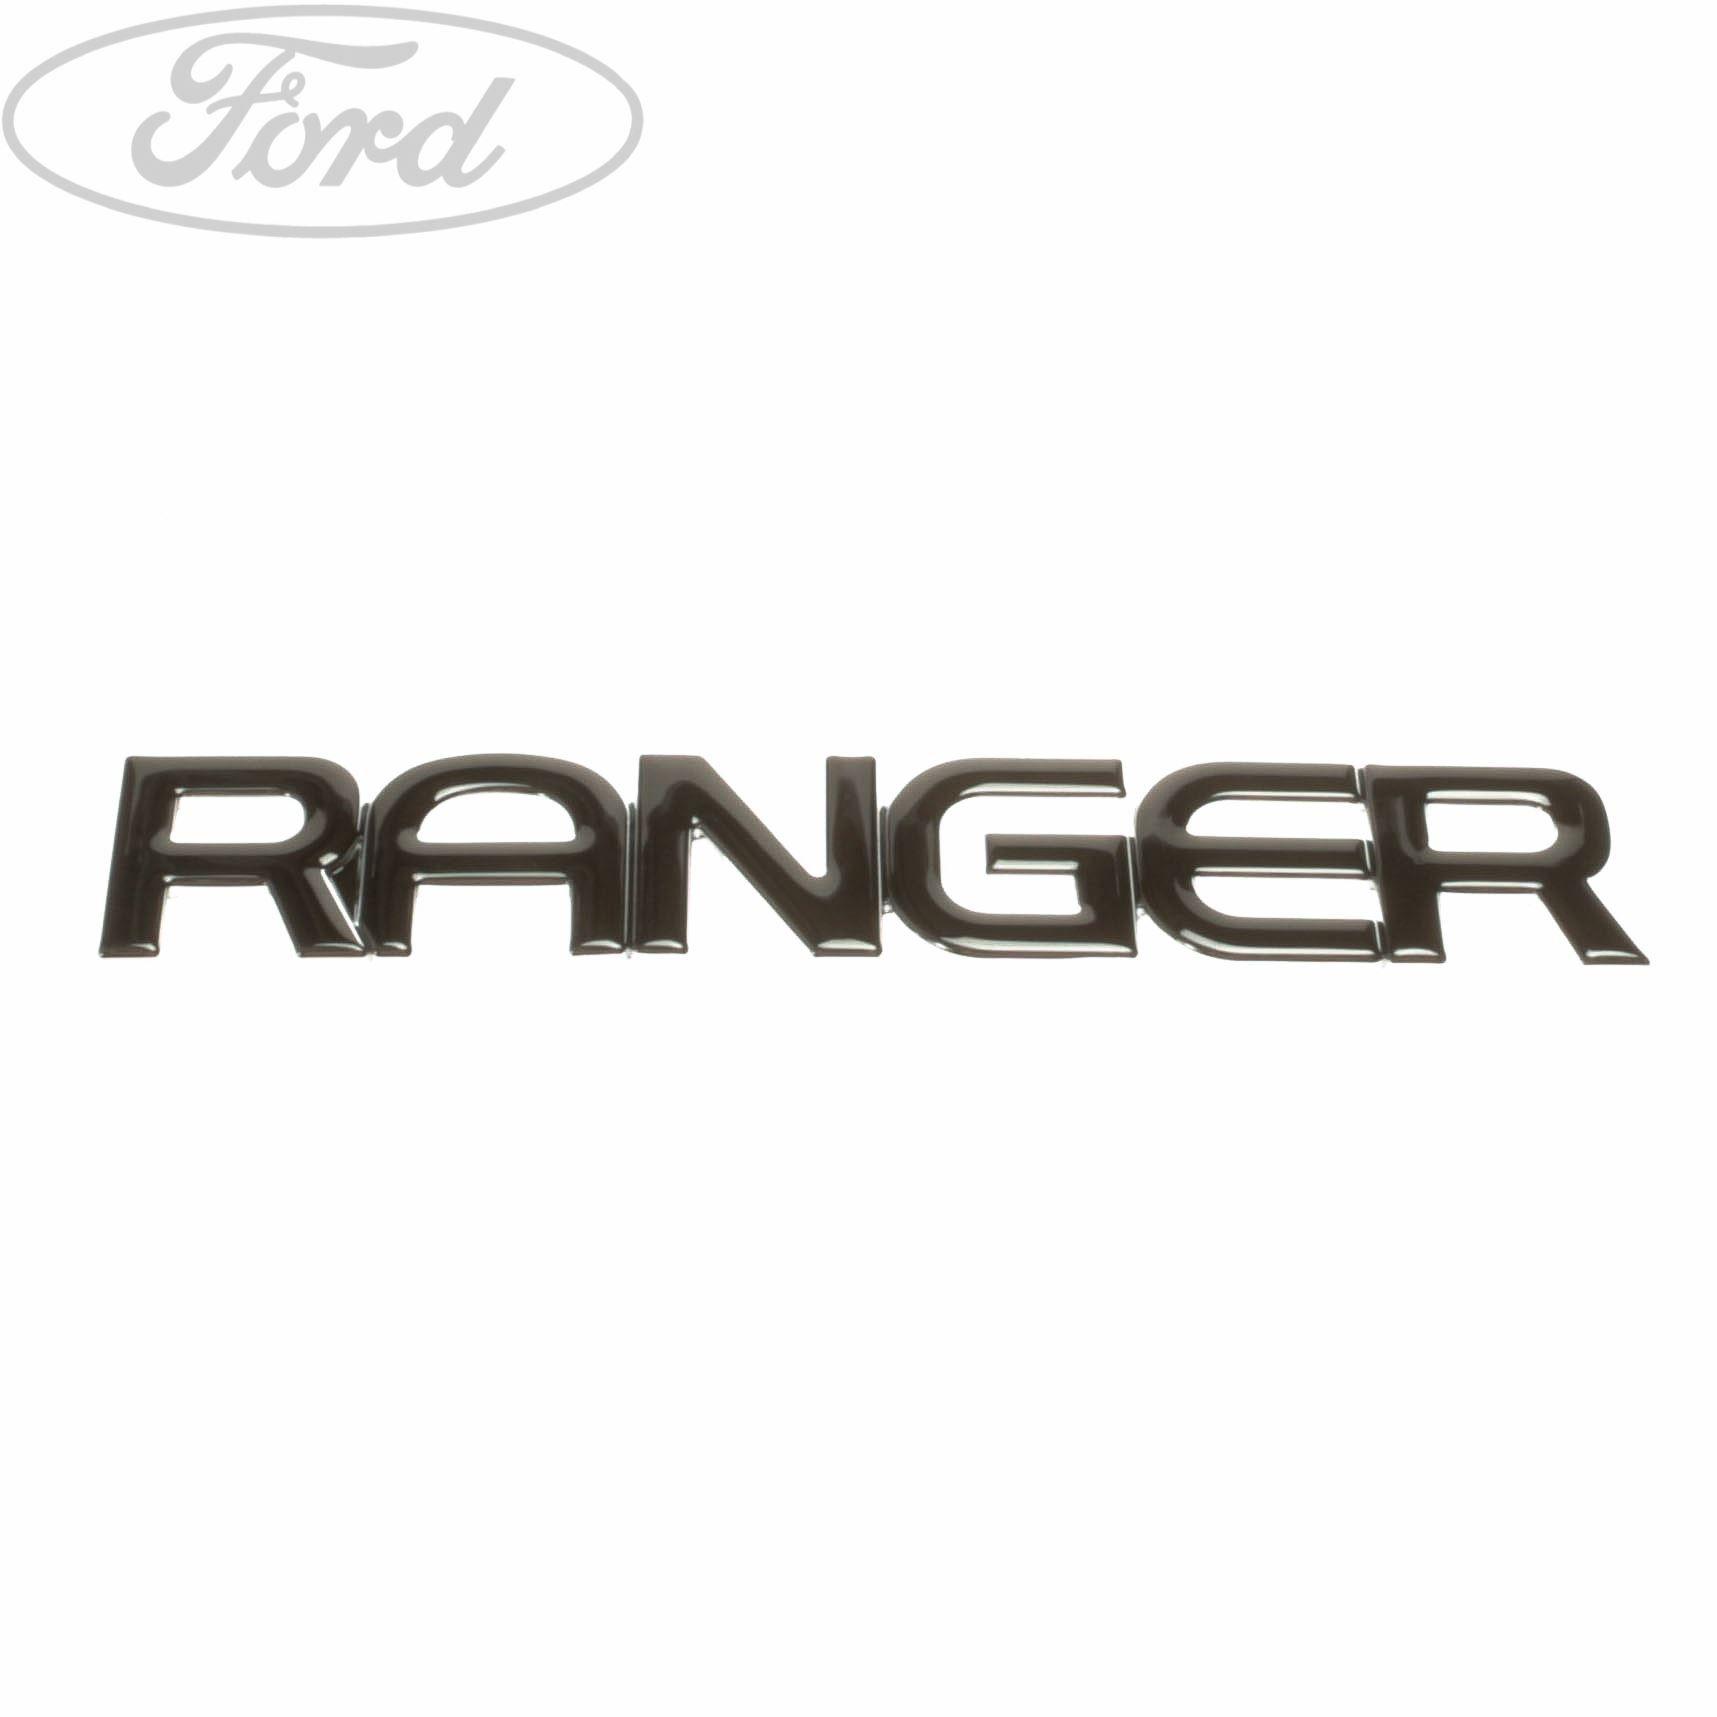 Ford Ranger Logo - Genuine Ford Ranger Tail Rear Door Name Plate Badge Emblem Left Side ...